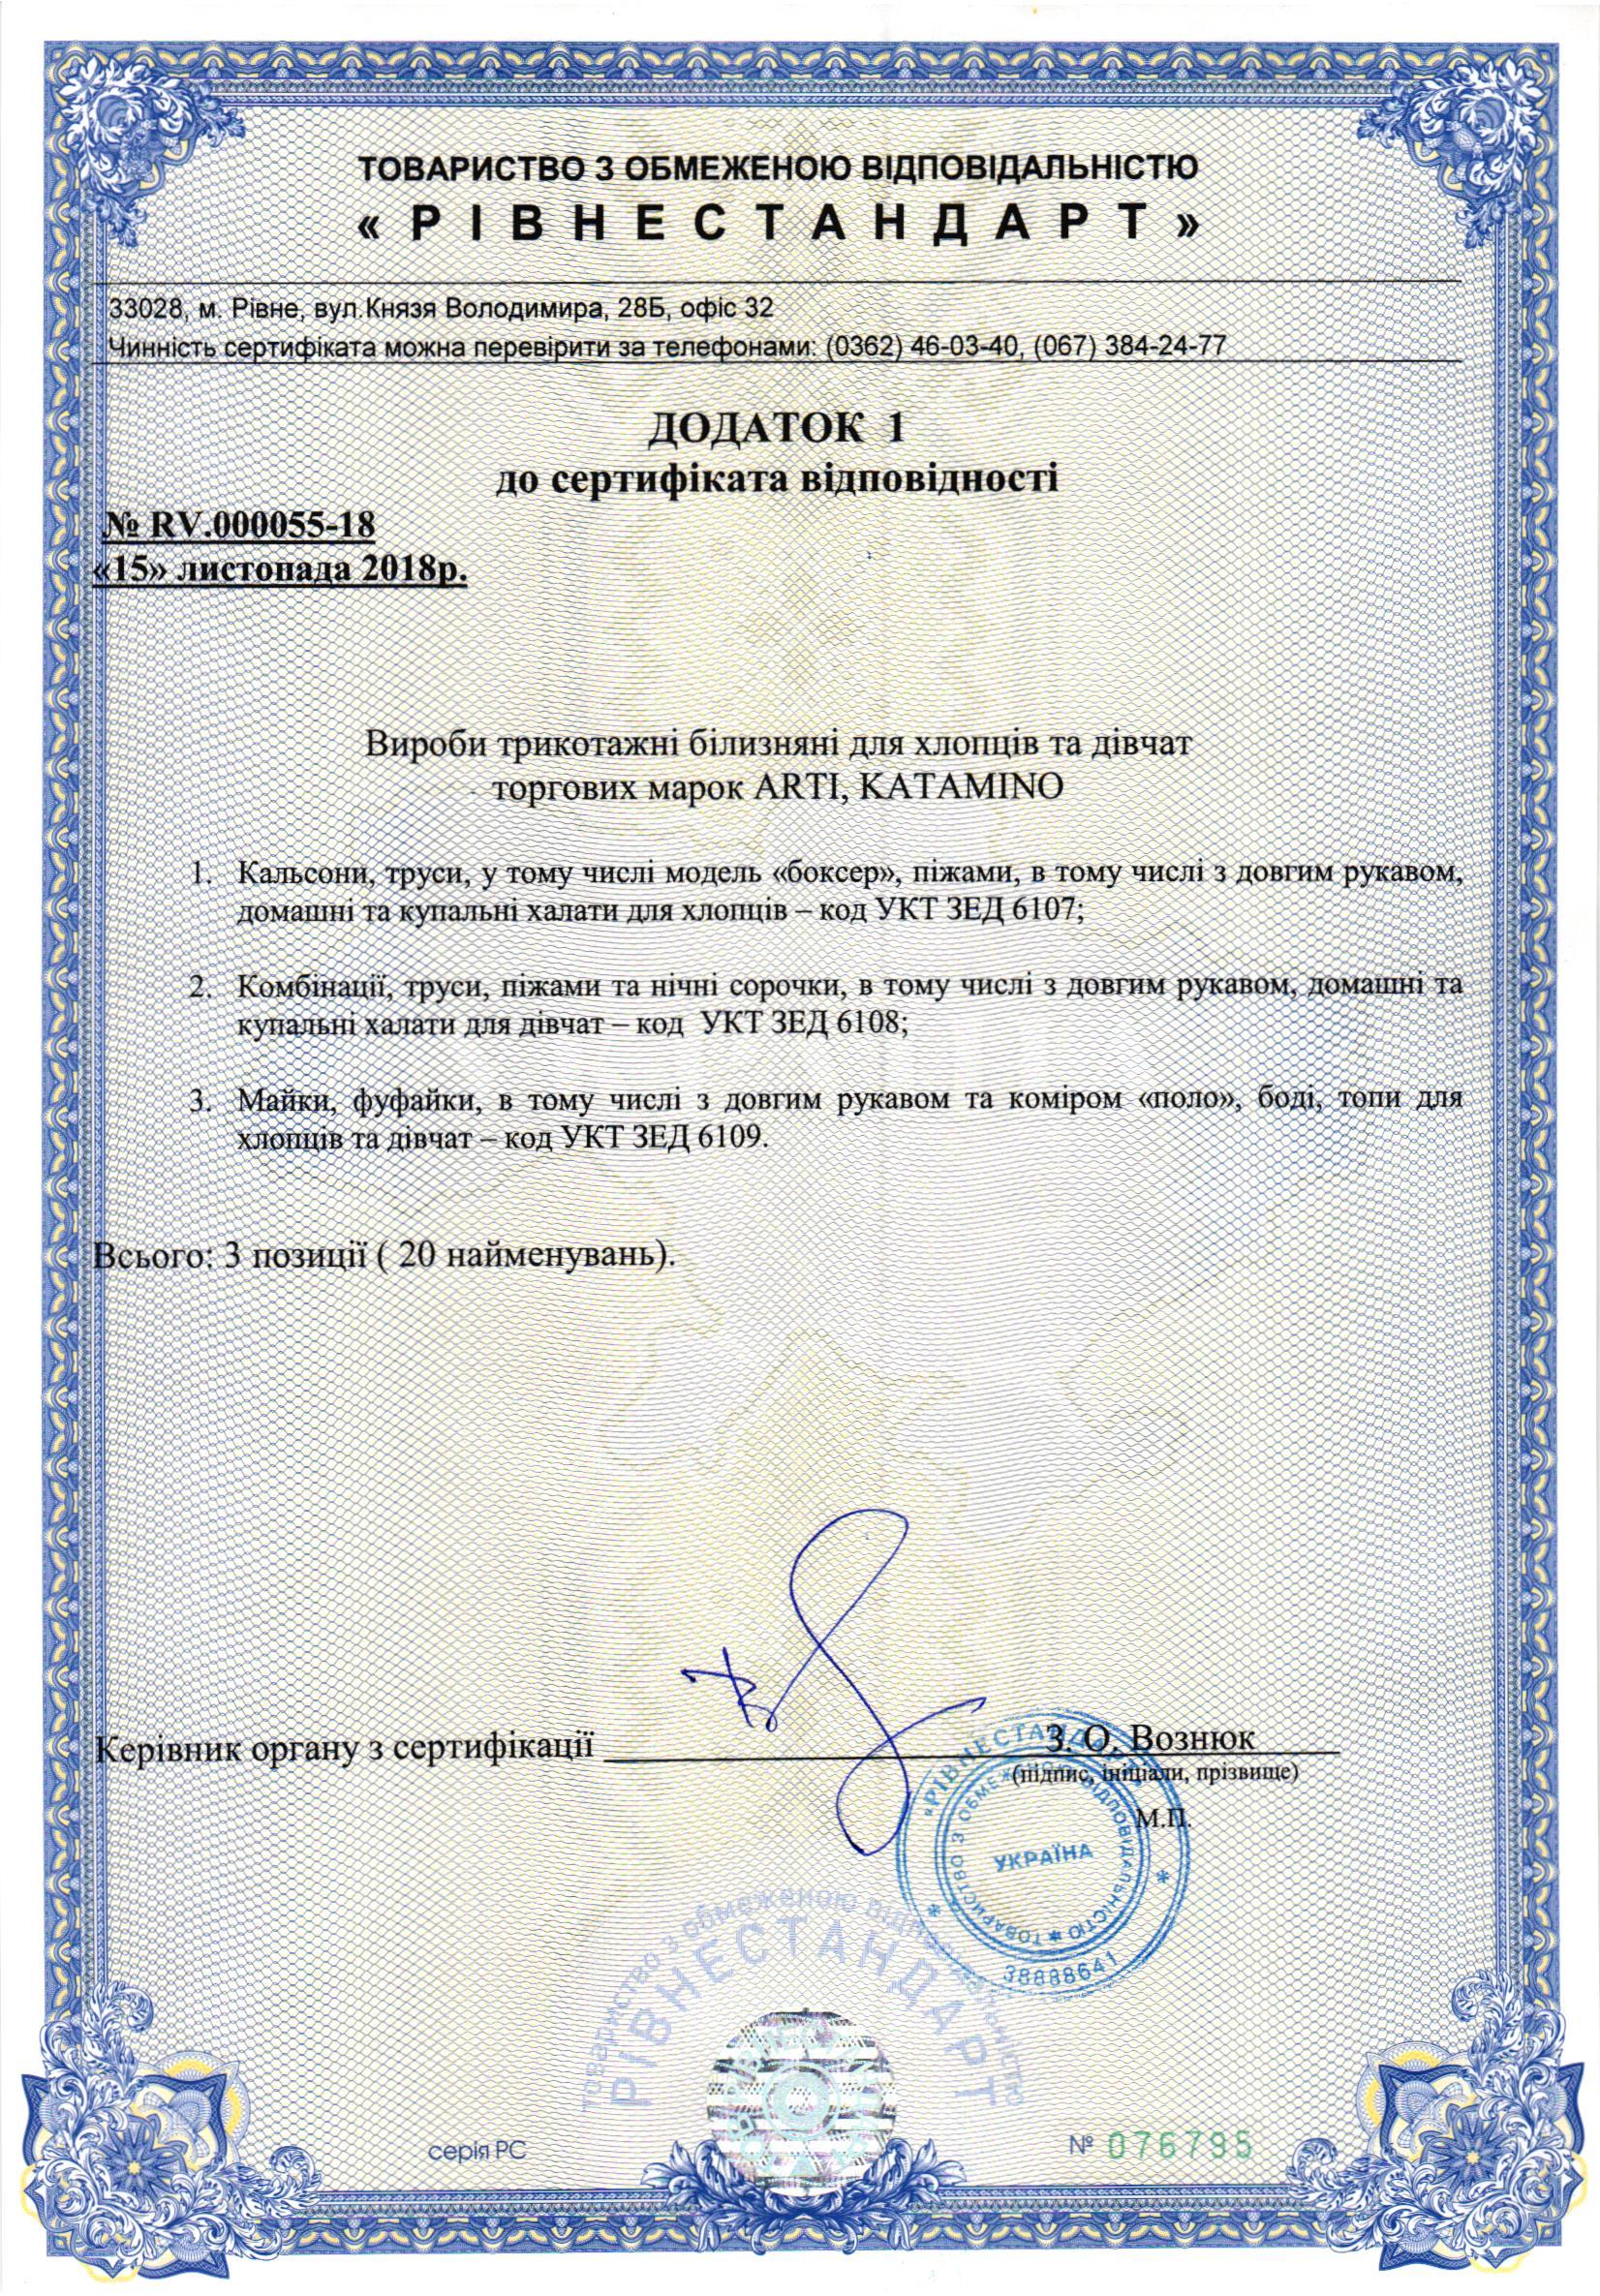 ukrayna-sertifika (2).jpg (1.04 MB)